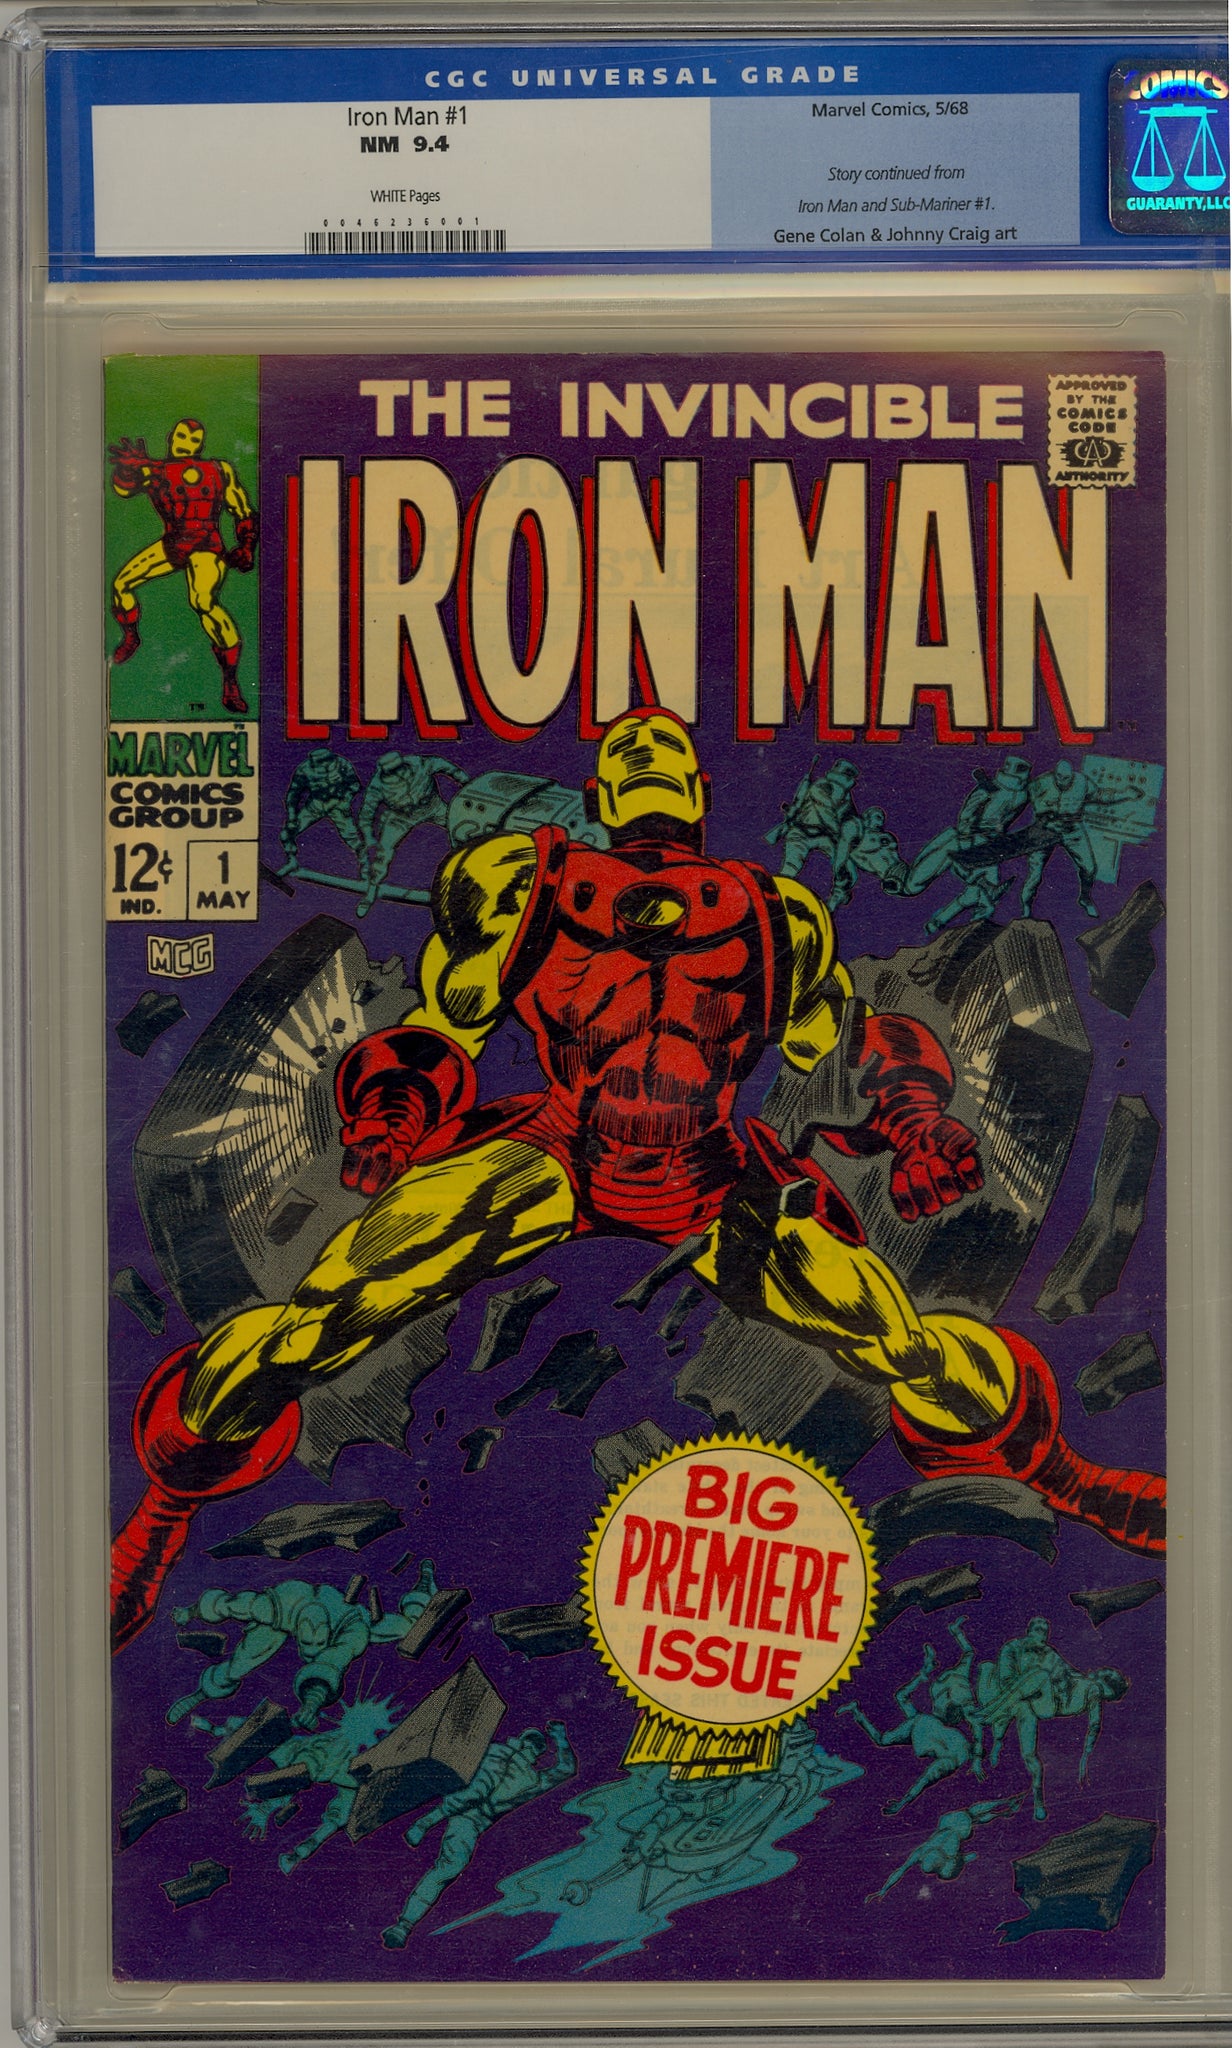 Iron Man #1 (1968)